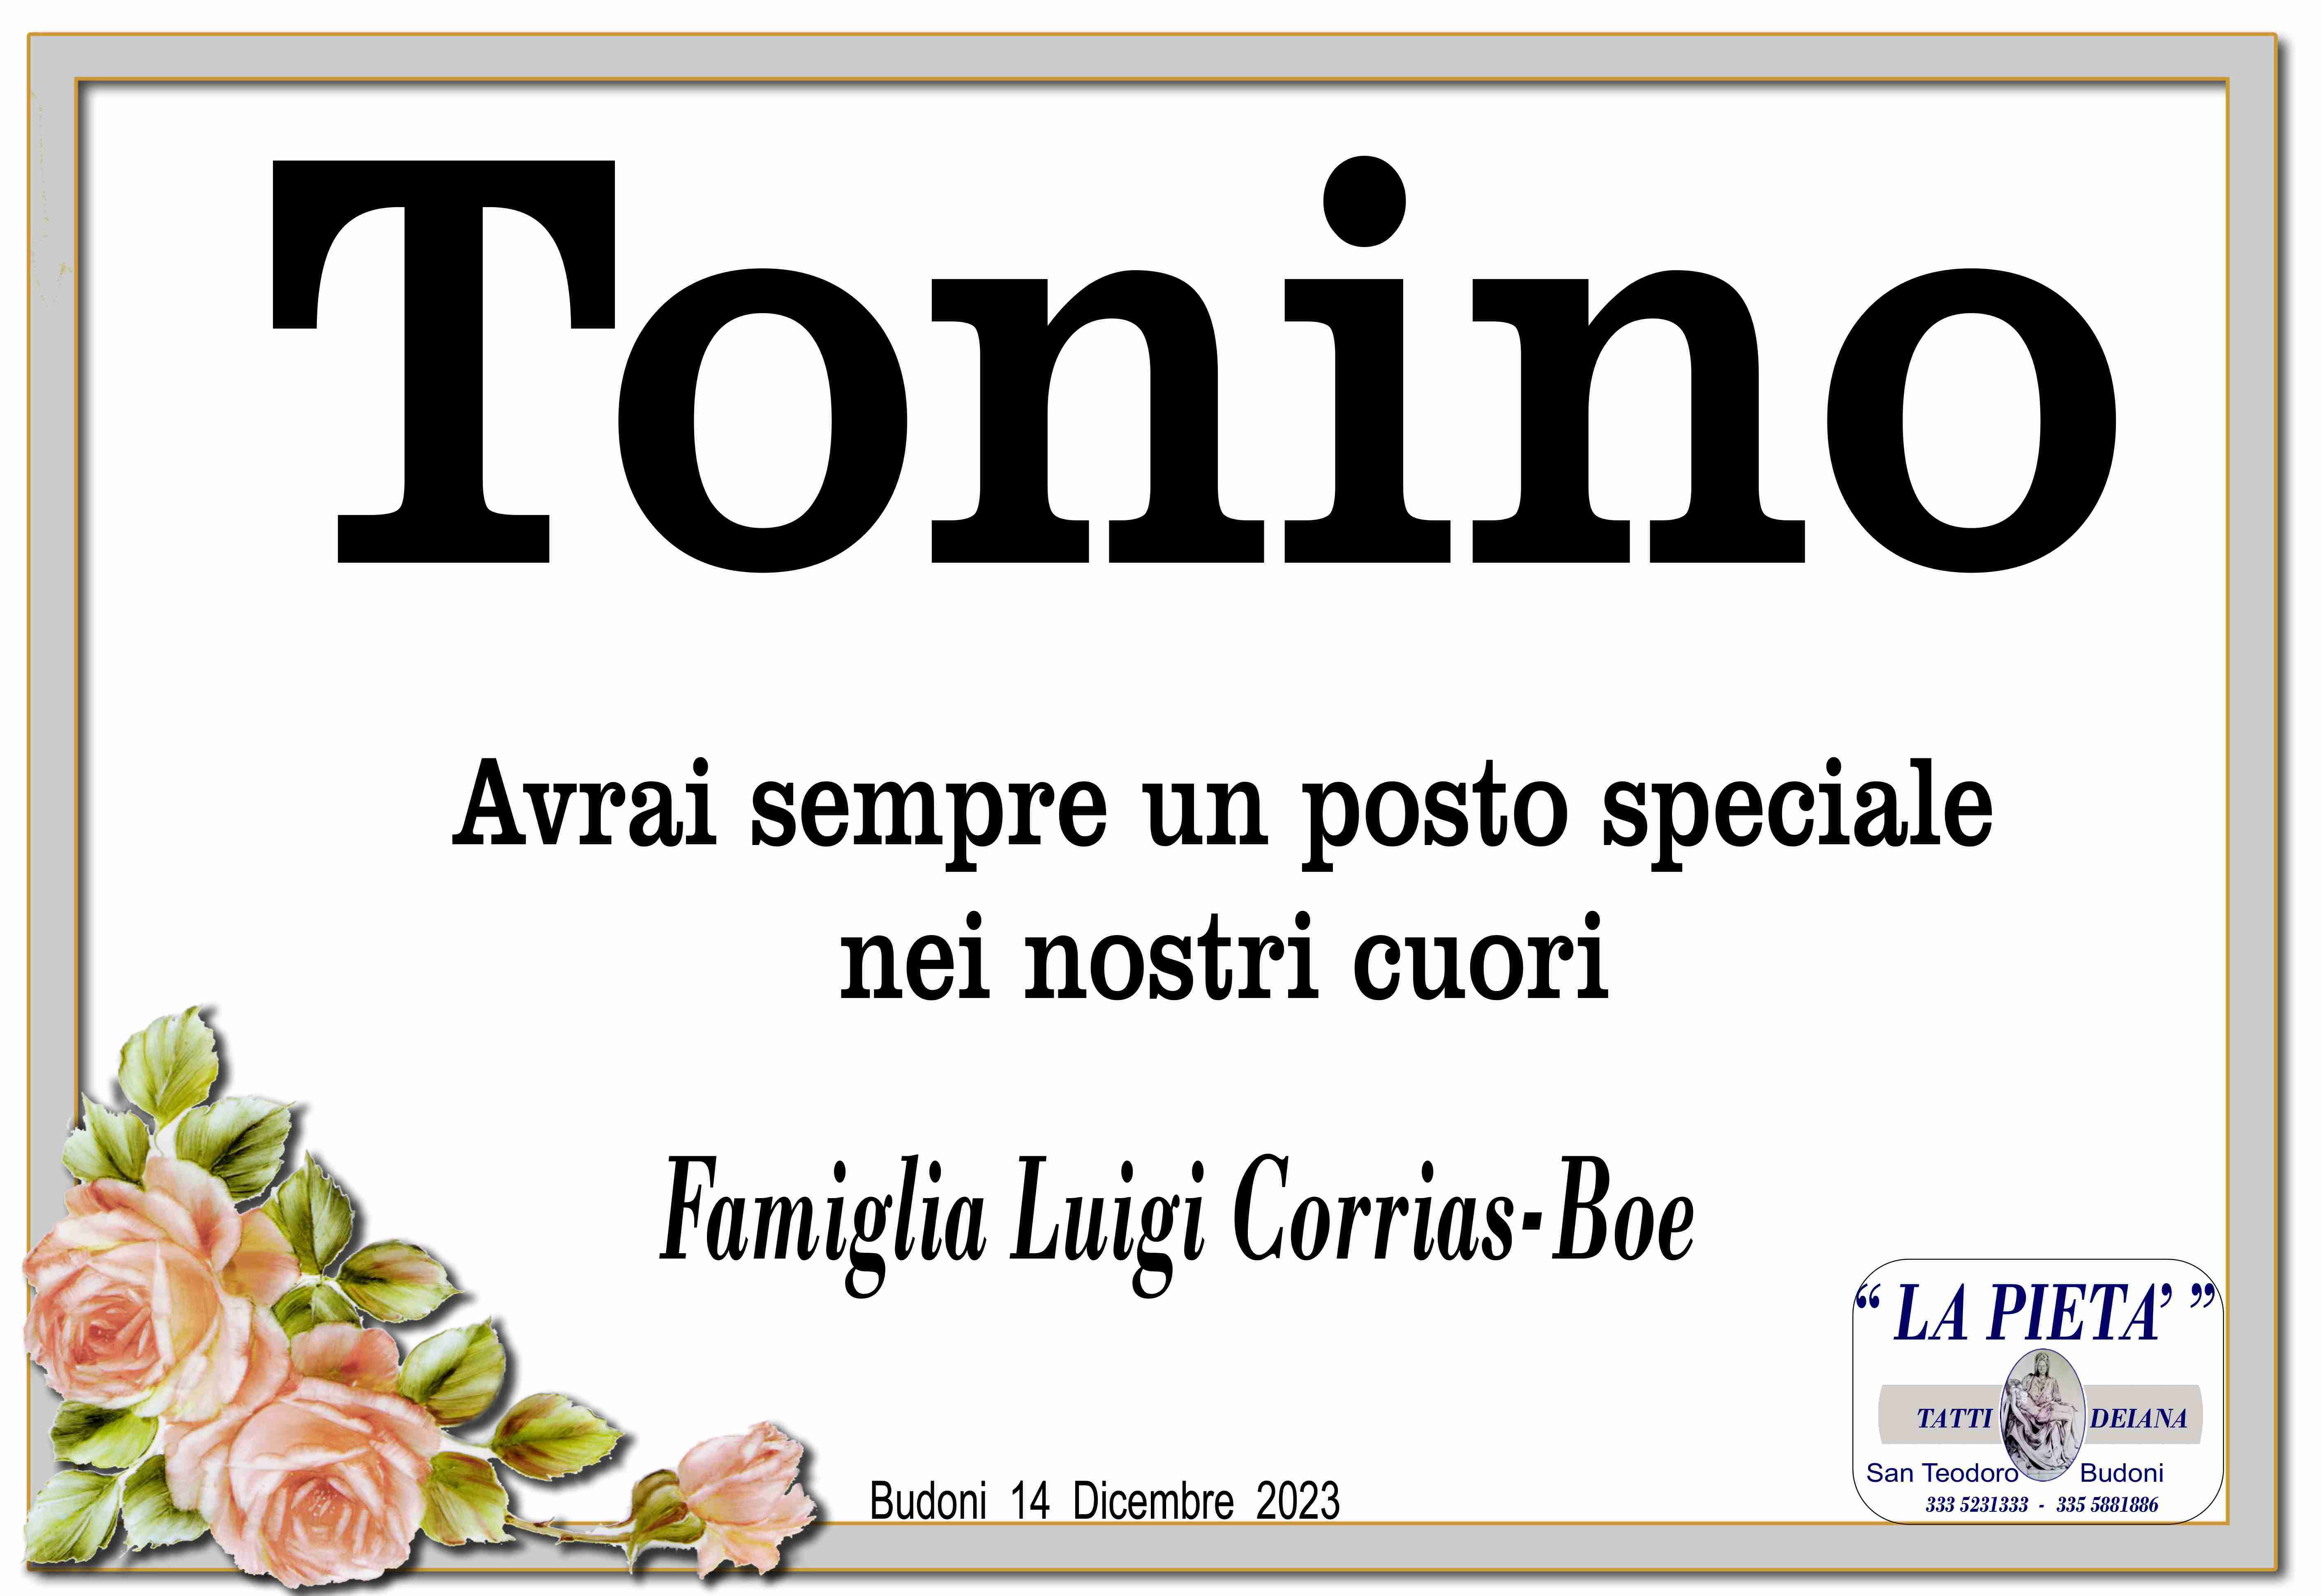 Tonino Bacciu